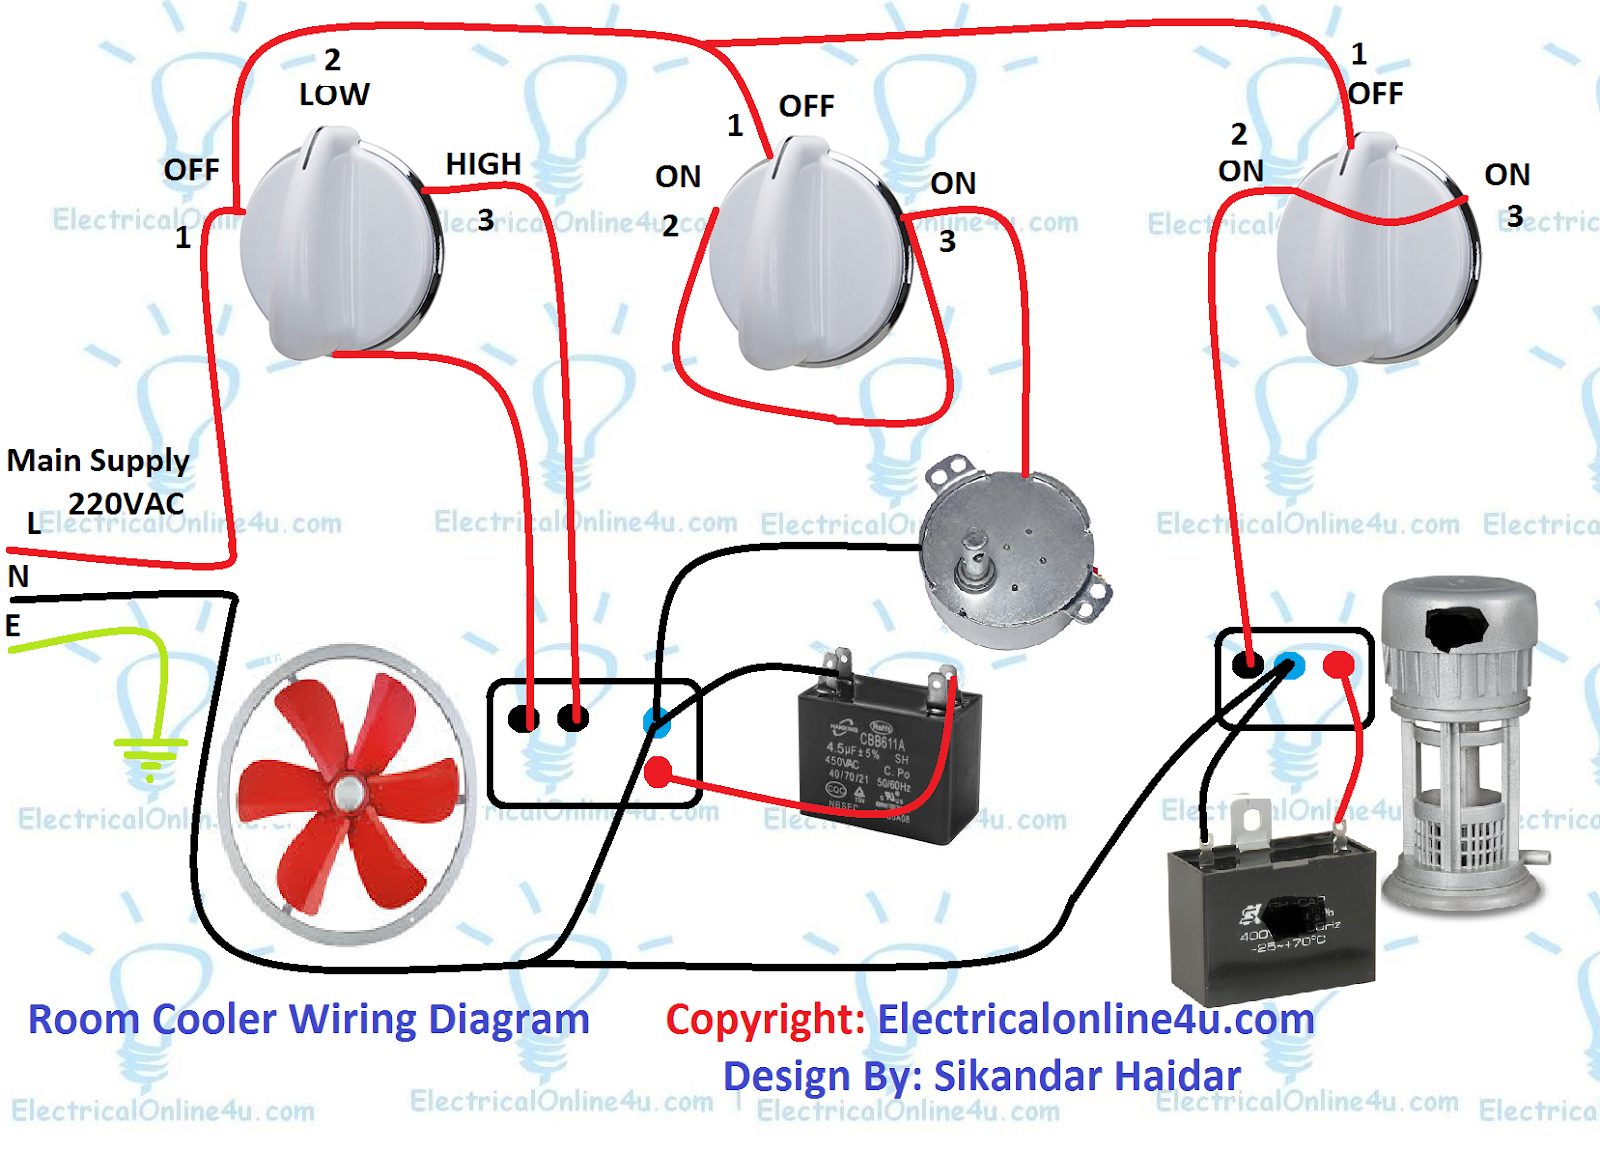 Air Room Water Cooler Wiring Diagram - Electricalonline4u